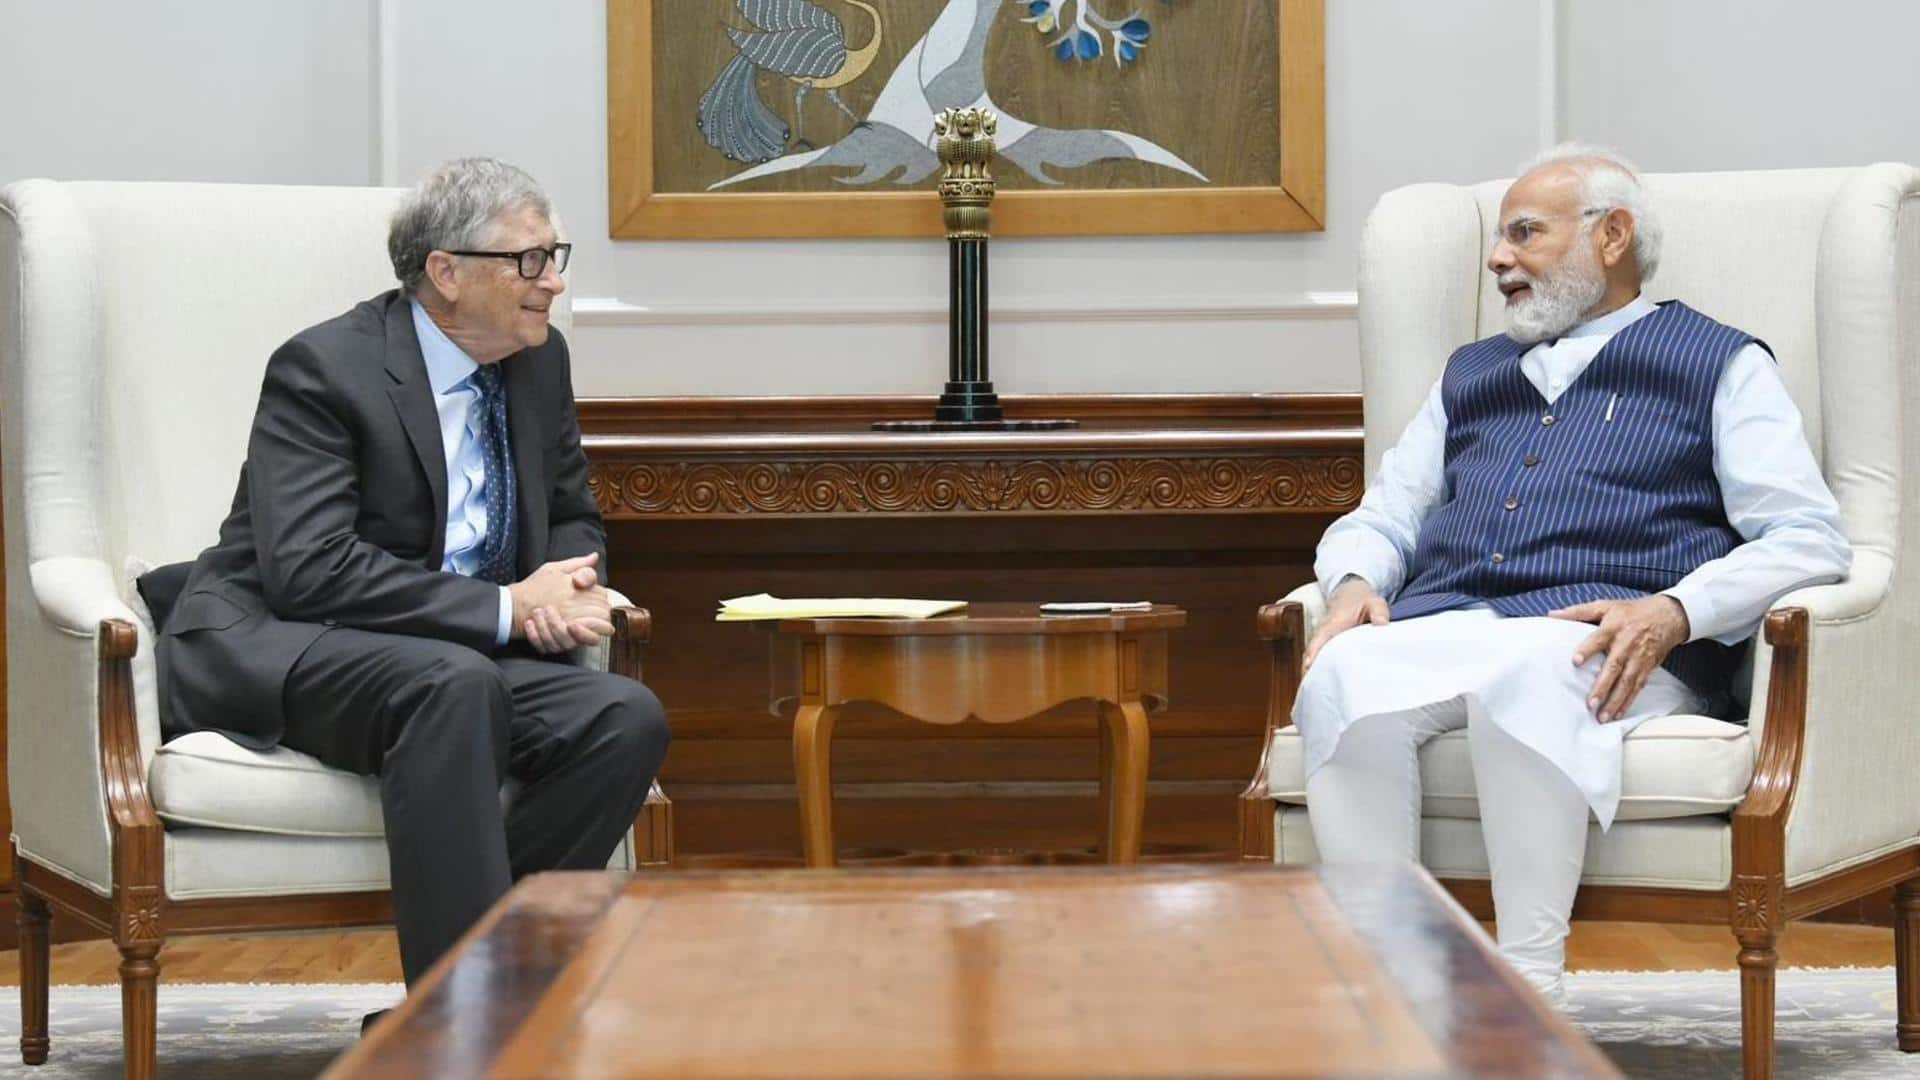 Bill Gates meets Modi, lauds India's progress in various sectors